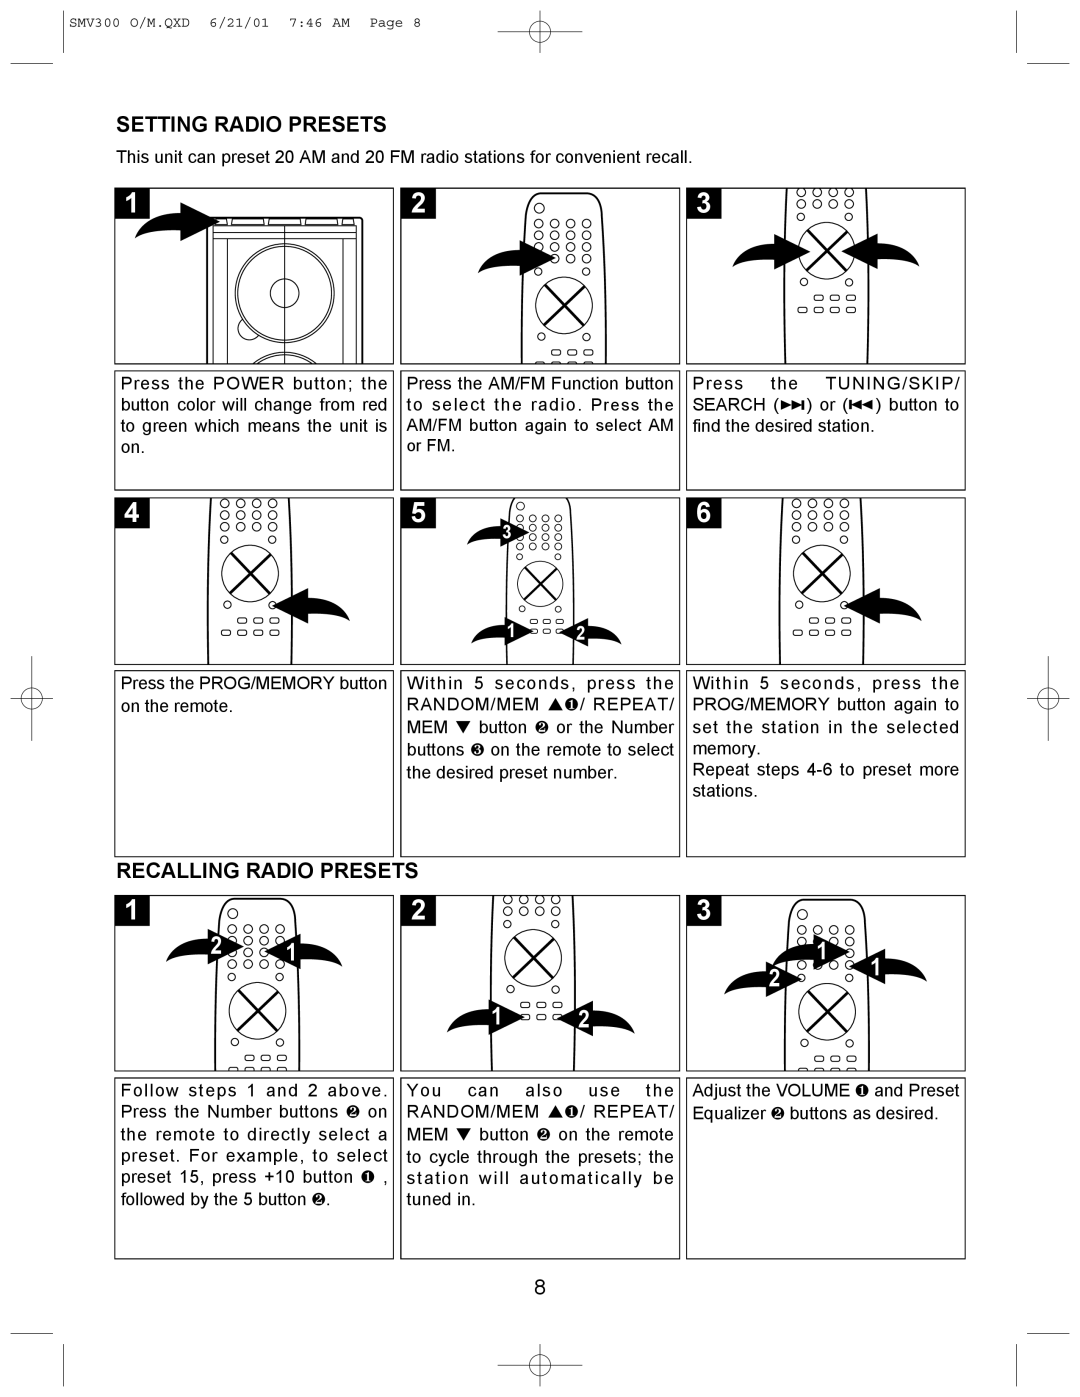 Scotts SMV300 instruction manual Setting Radio Presets, Recalling Radio Presets 